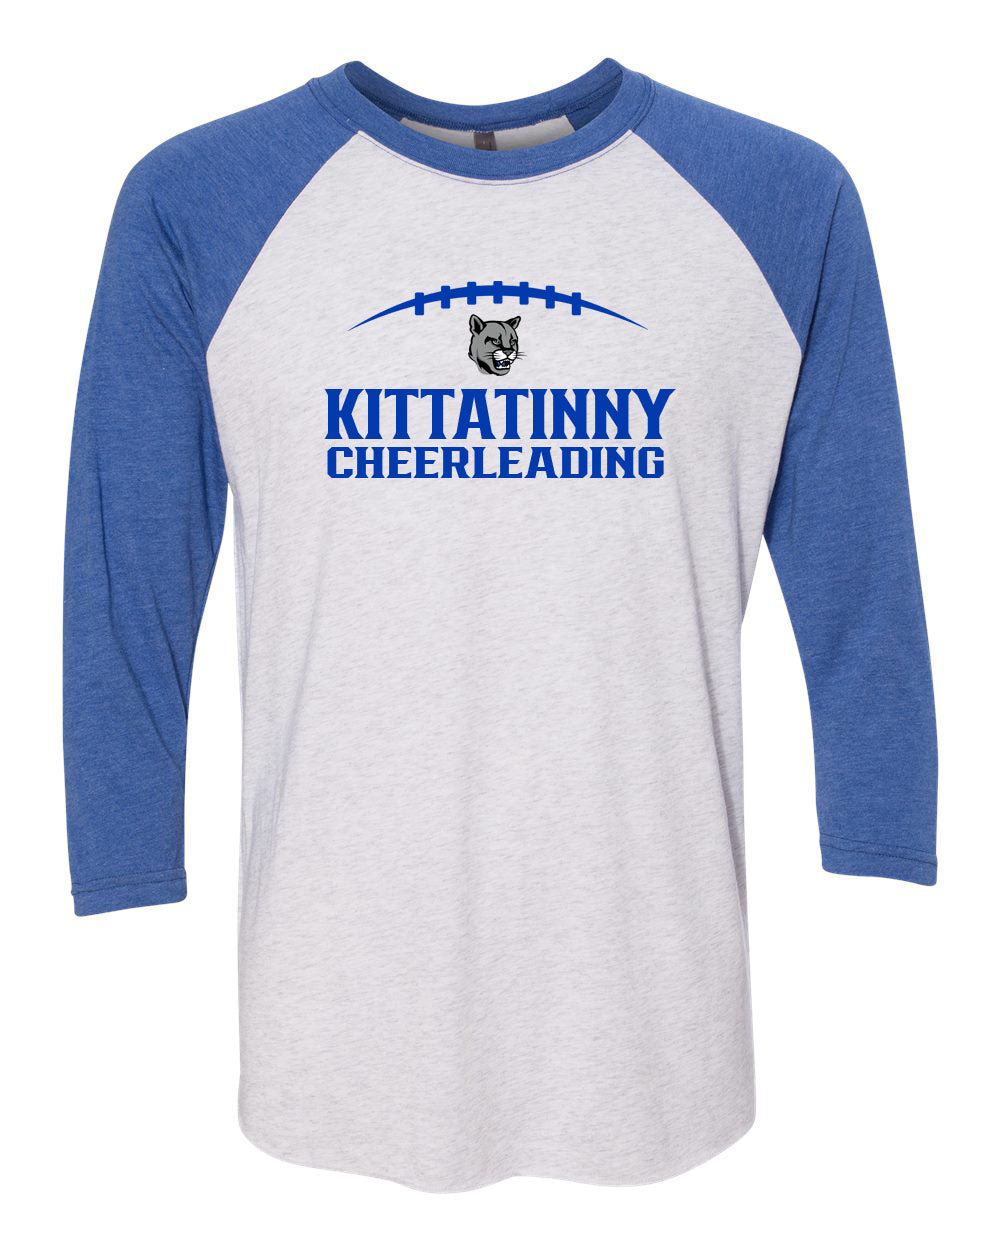 Kittatinny Cheer Design 7 raglan shirt